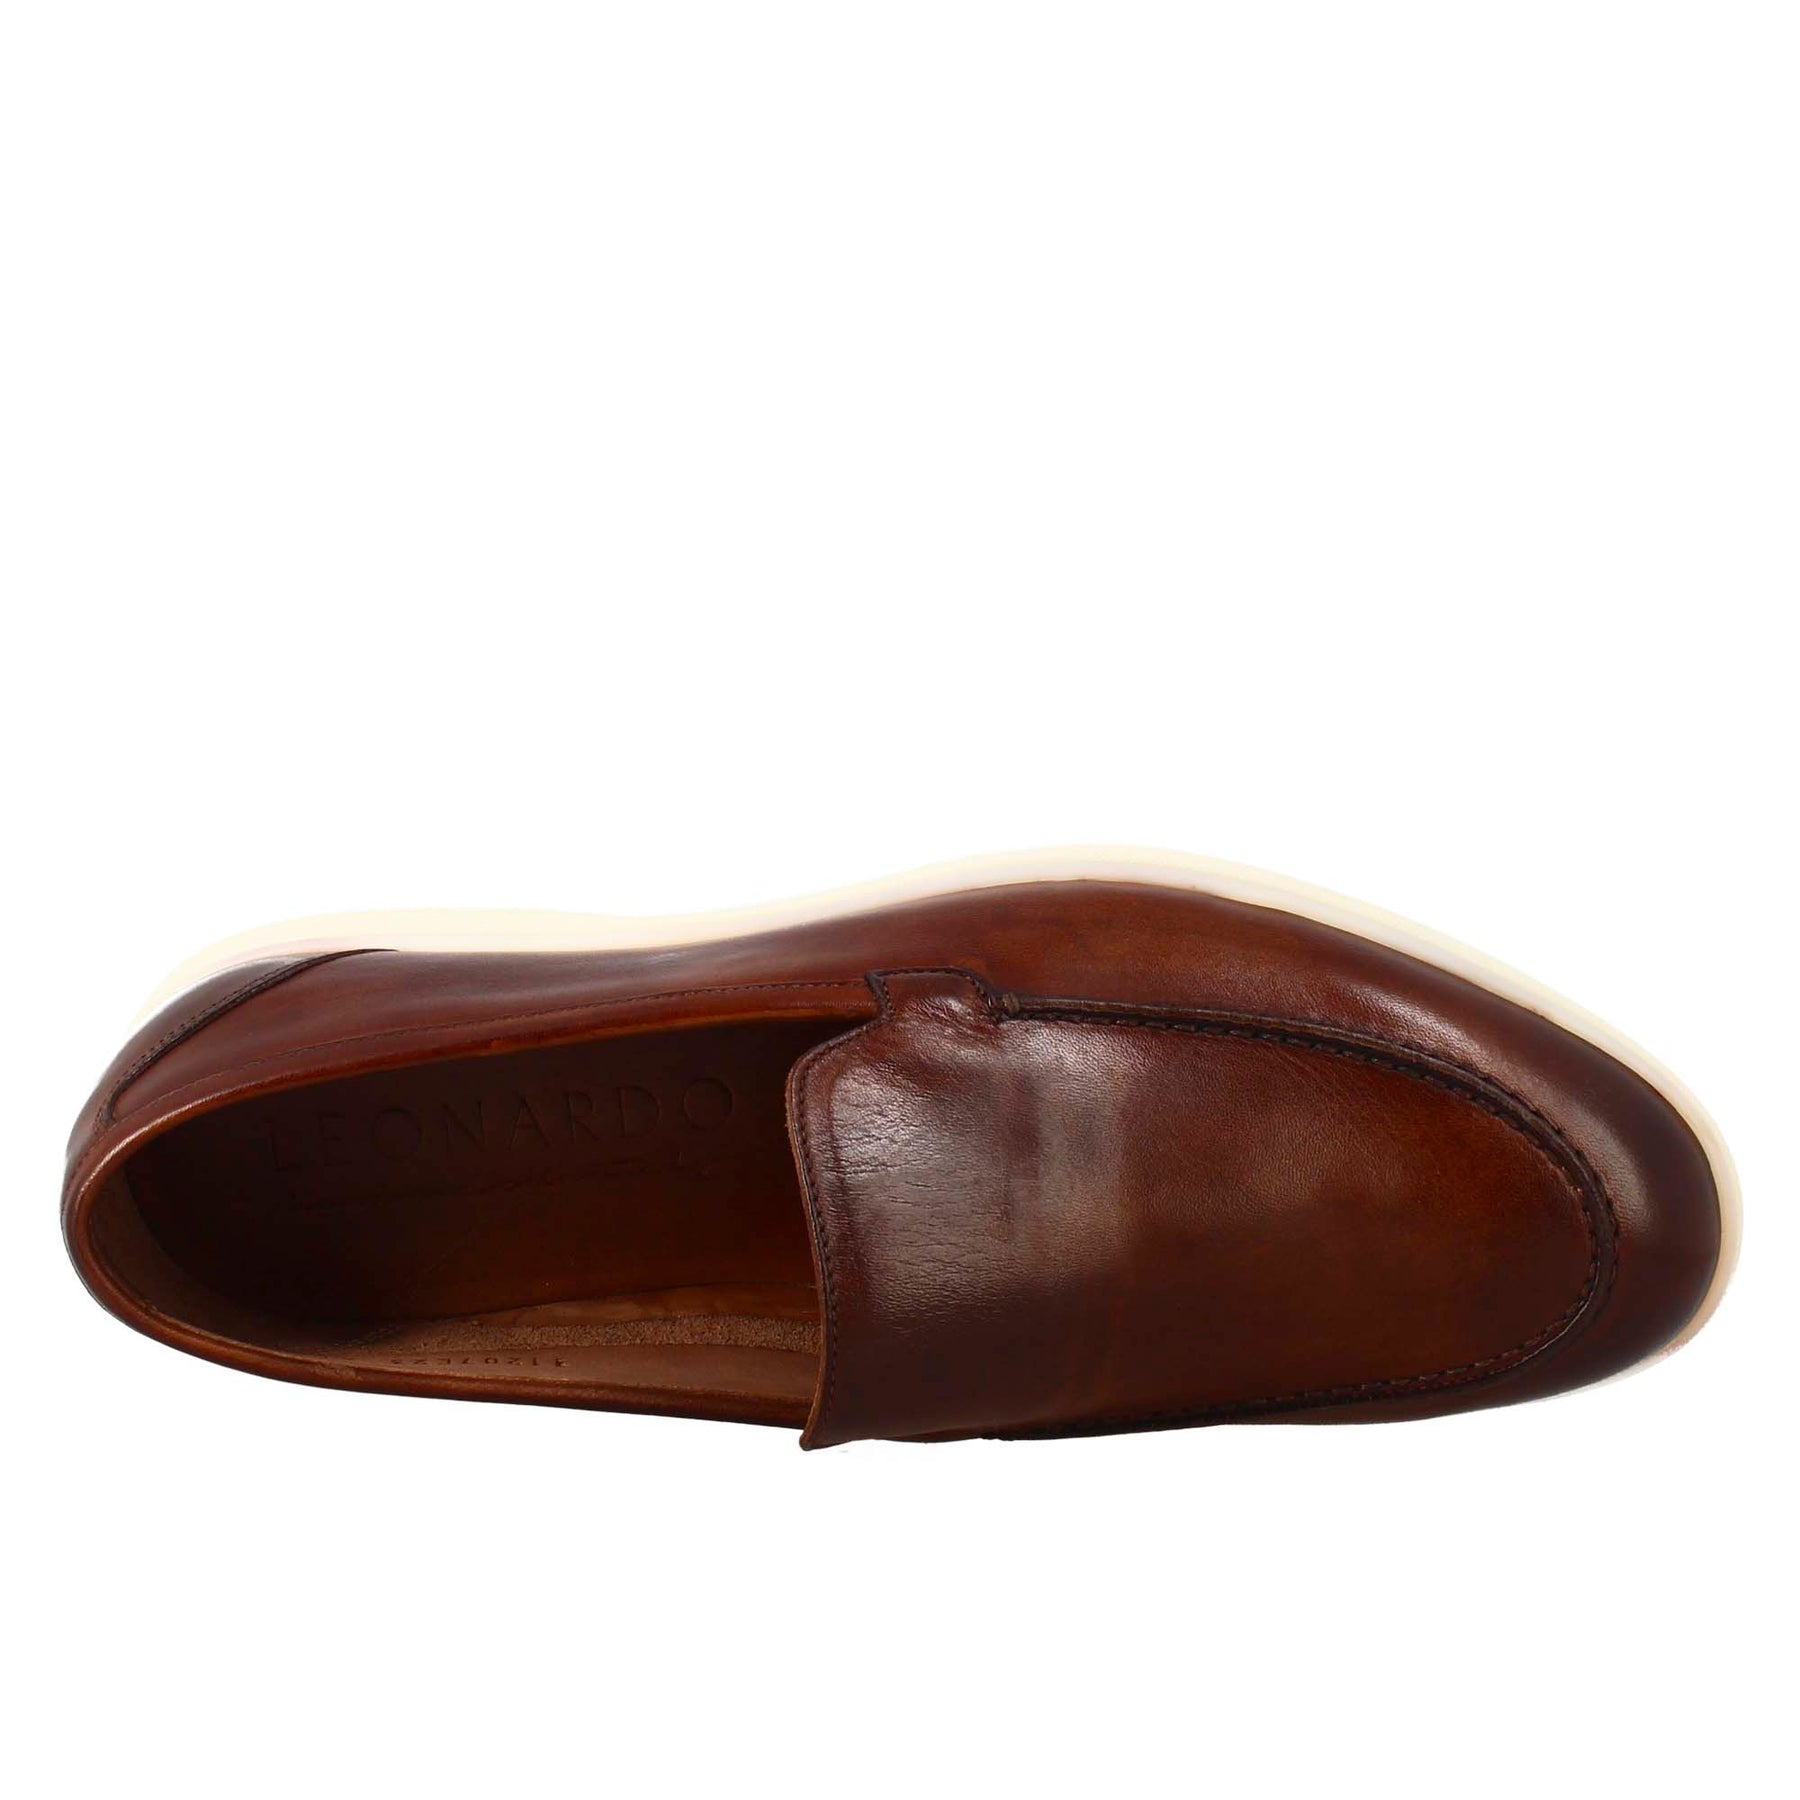 Elegant brown unlined moccasin for men in full grain leather